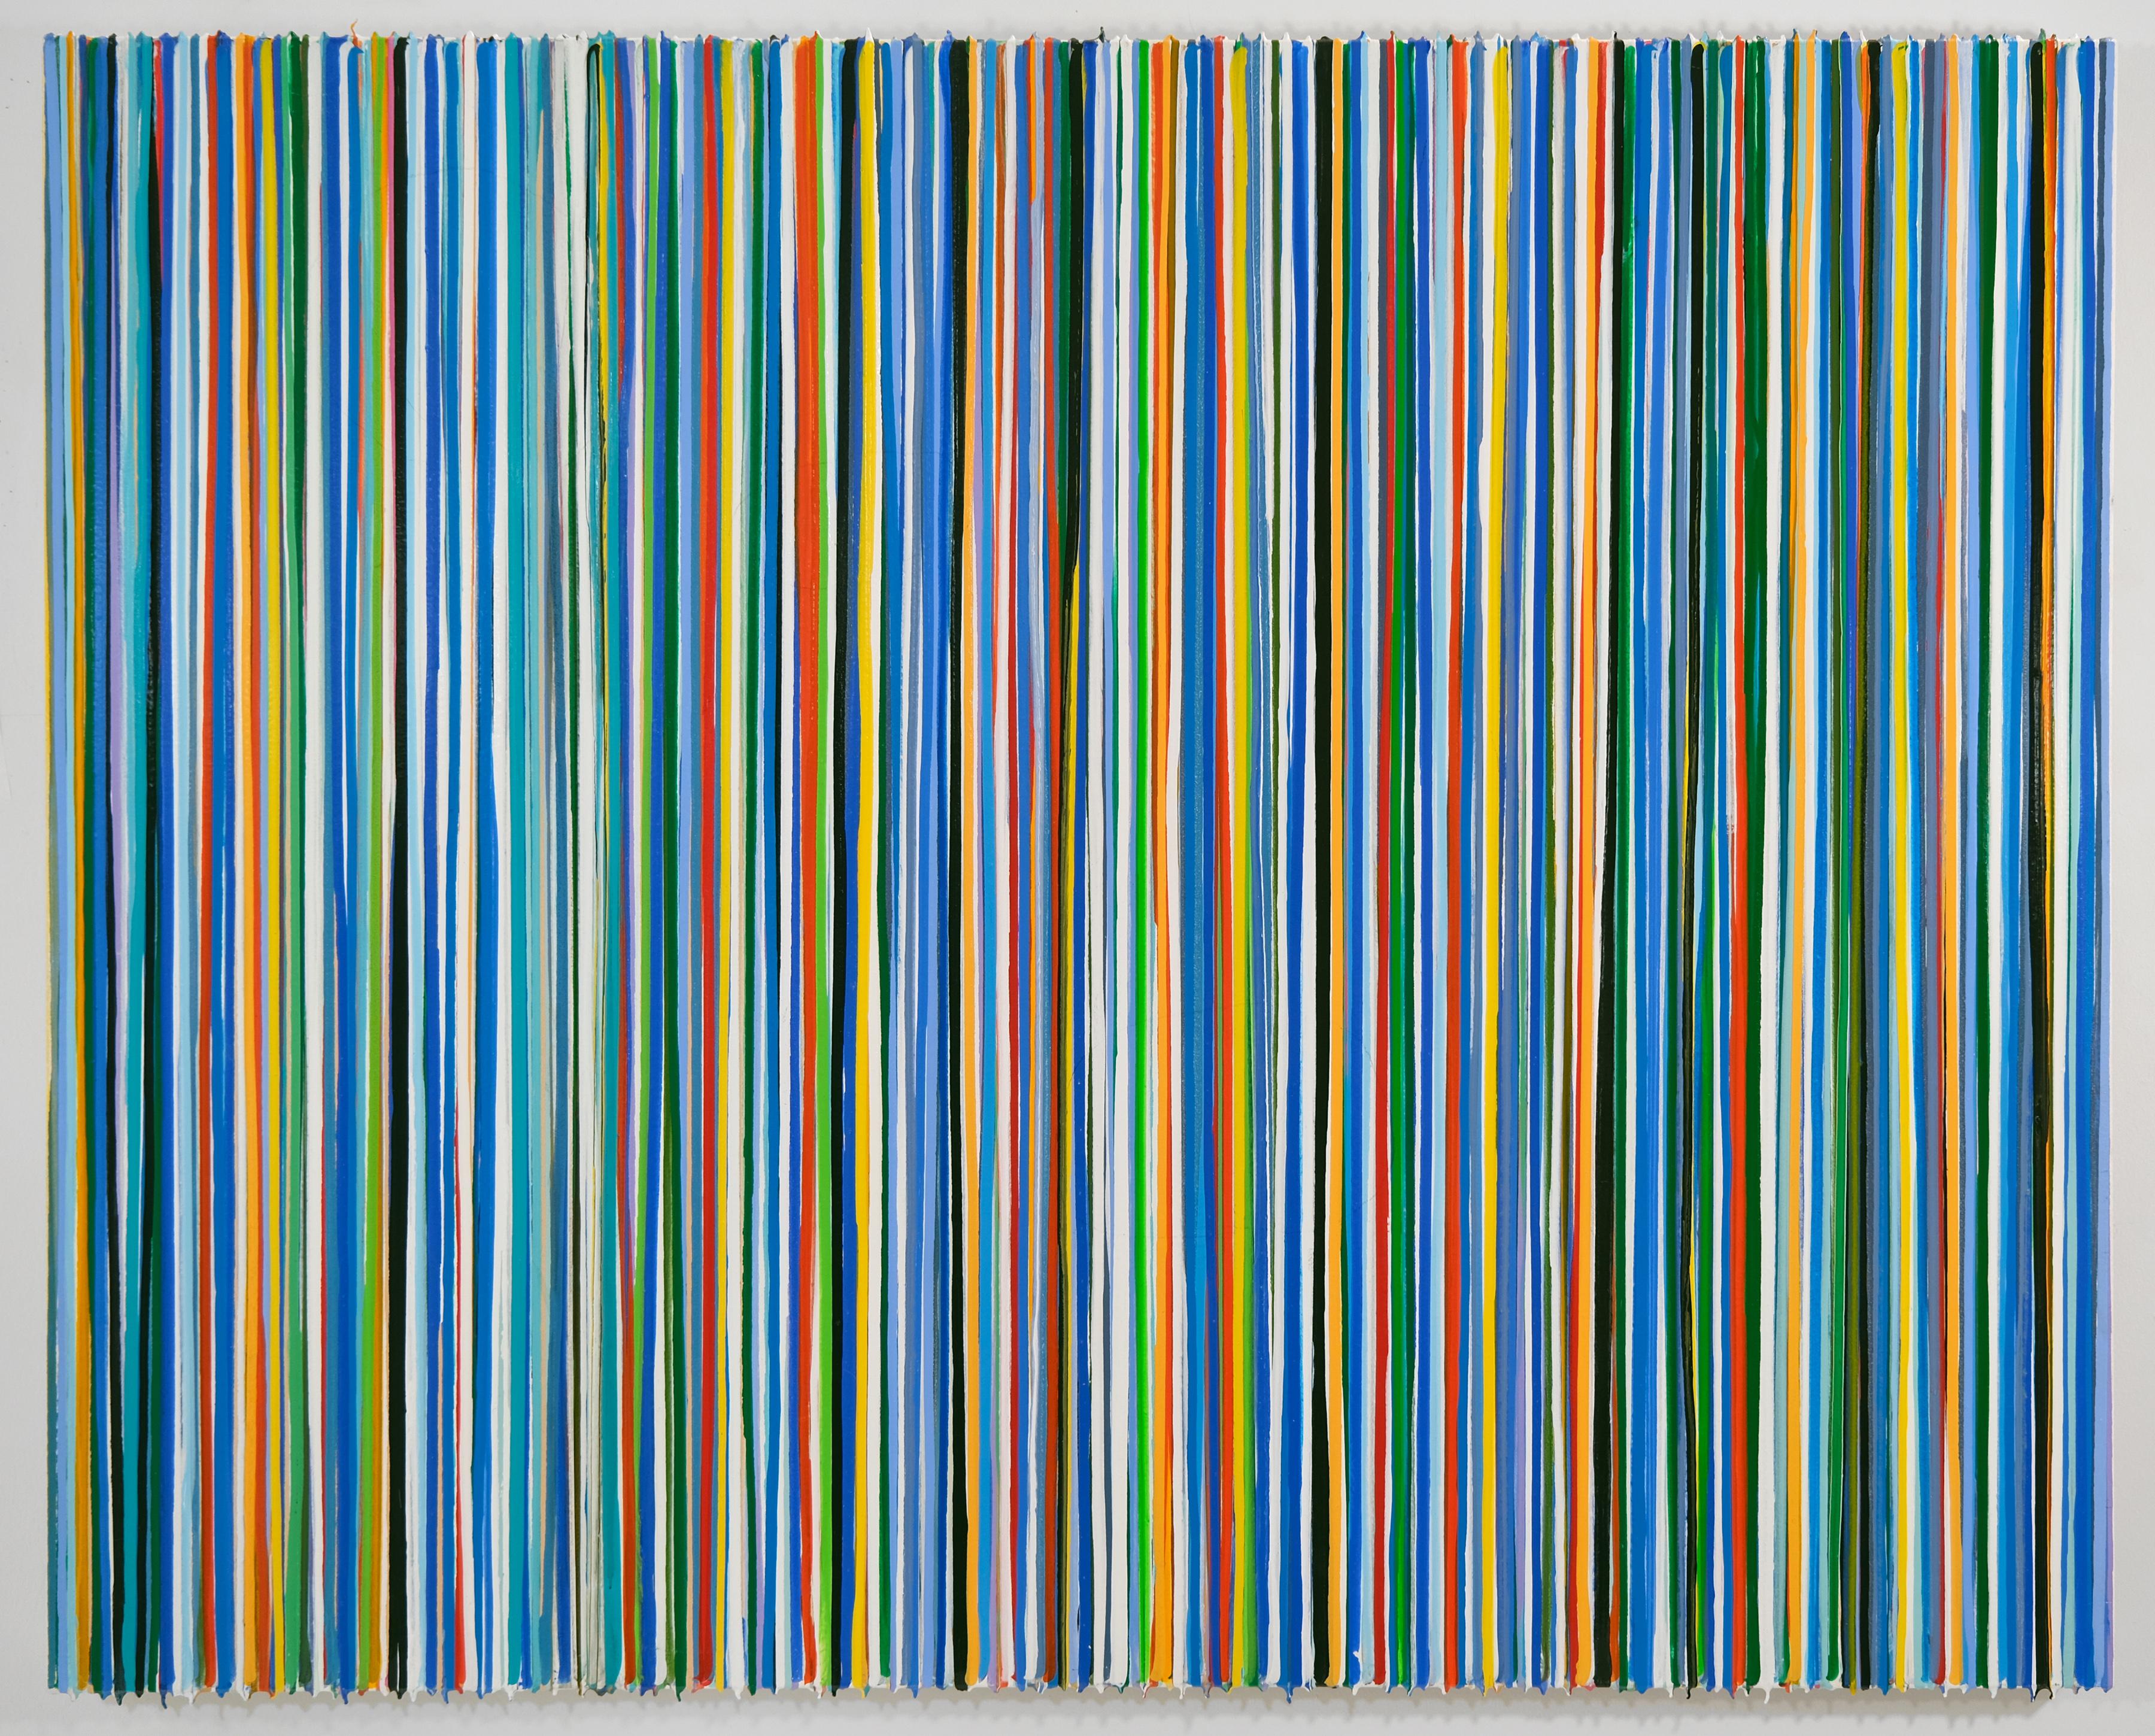 Marthann Masterson Abstract Painting – Regatta V. Ölgemälde, Tropfengemälde, Abstrakt, Plethora von Farben, Emotionen